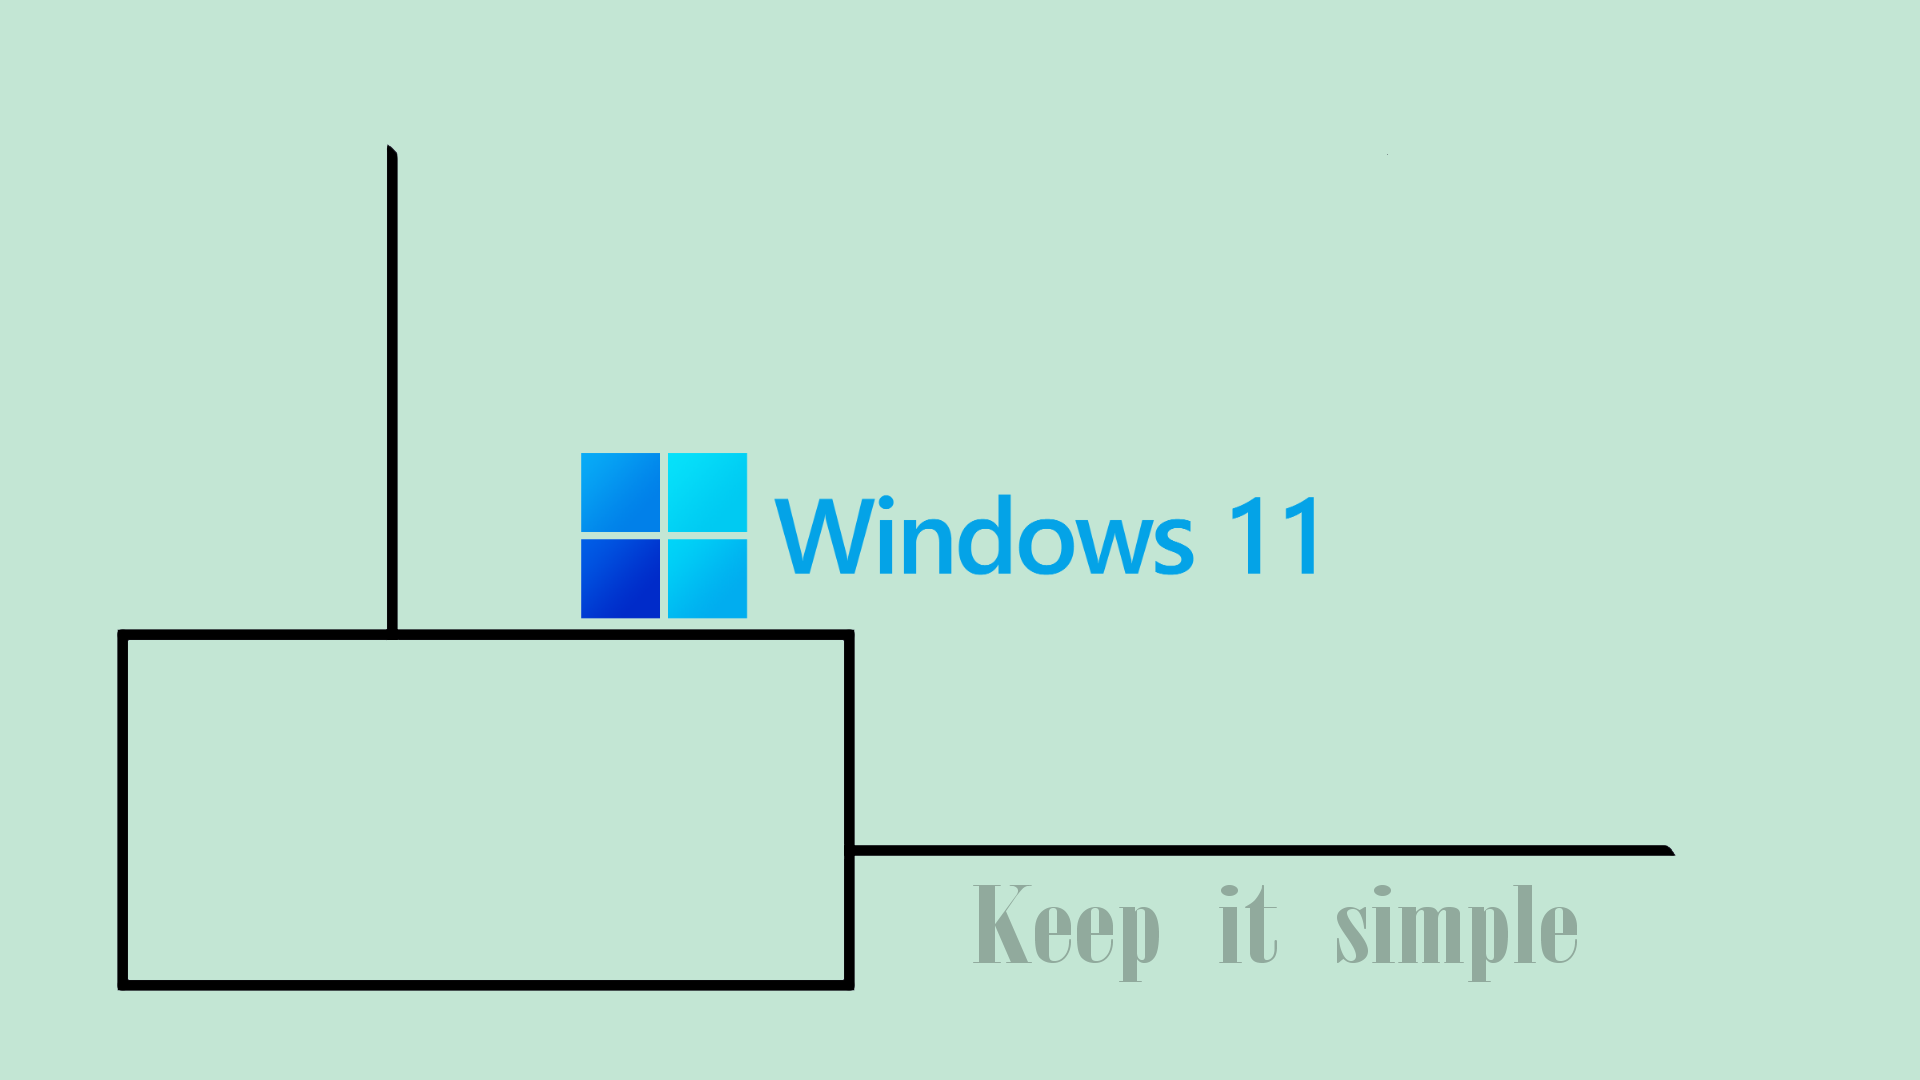 General 1920x1080 Windows 11 windows logo logo operating system Microsoft